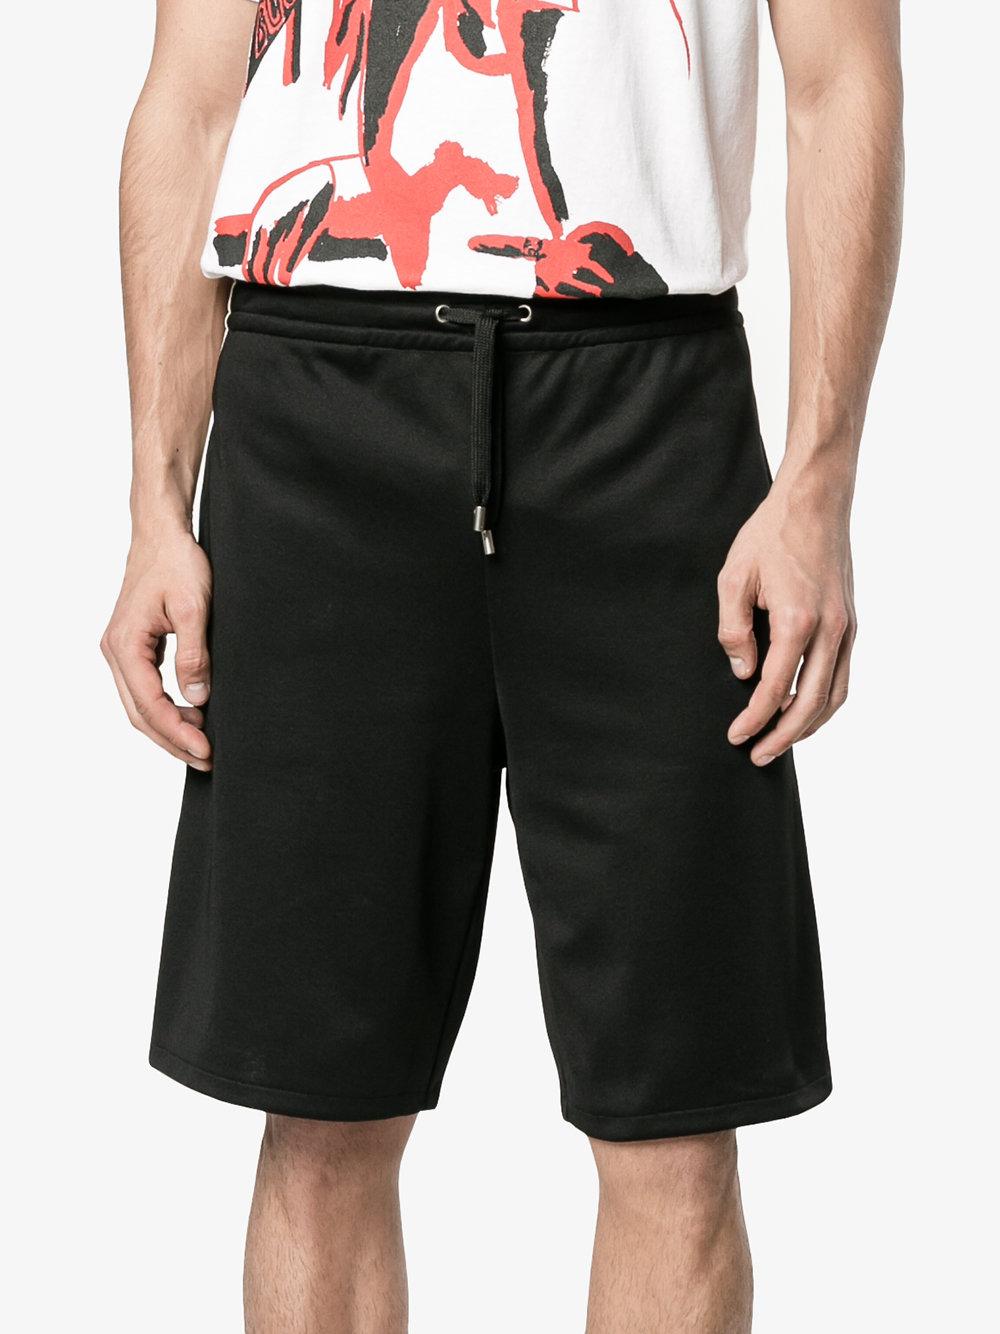 Gucci Logo Jacquard Trimmed Shorts in Black for Men - Lyst